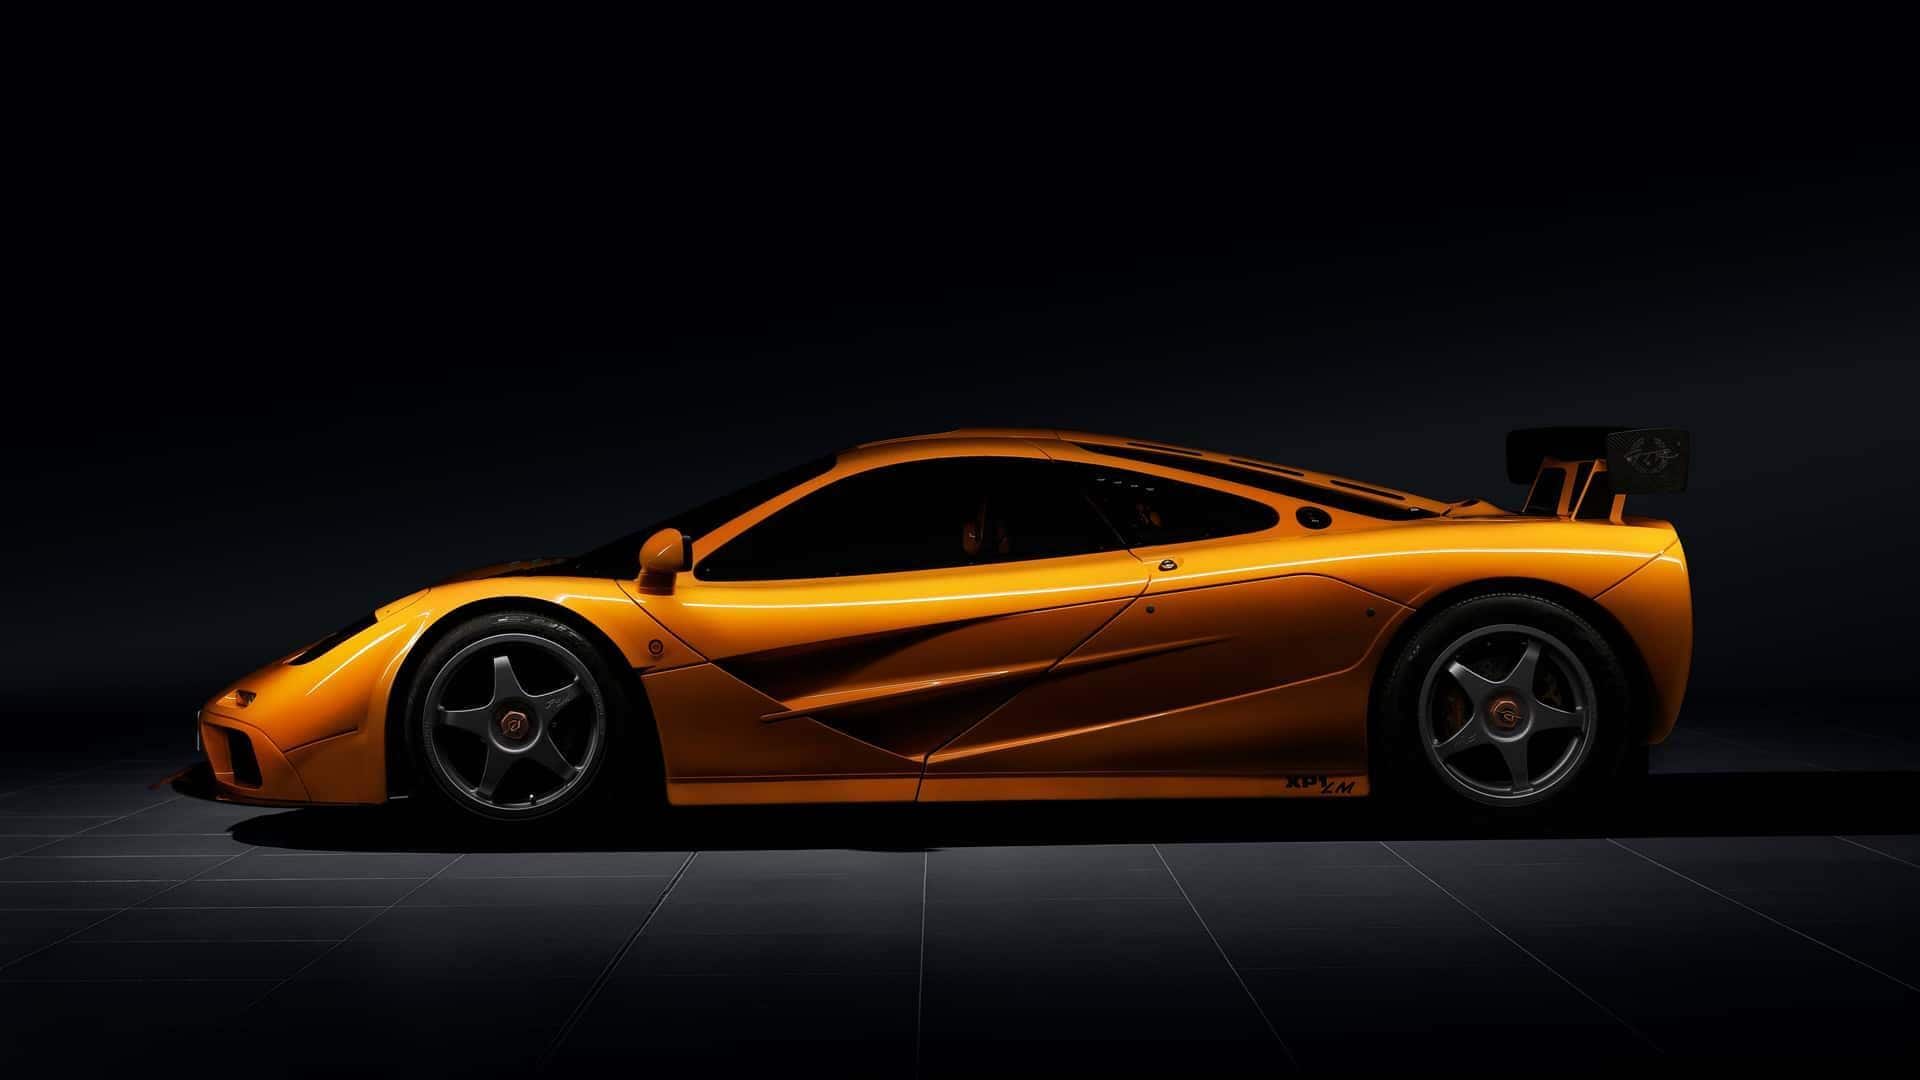 McLaren reveals future design language rooted in racing legacy